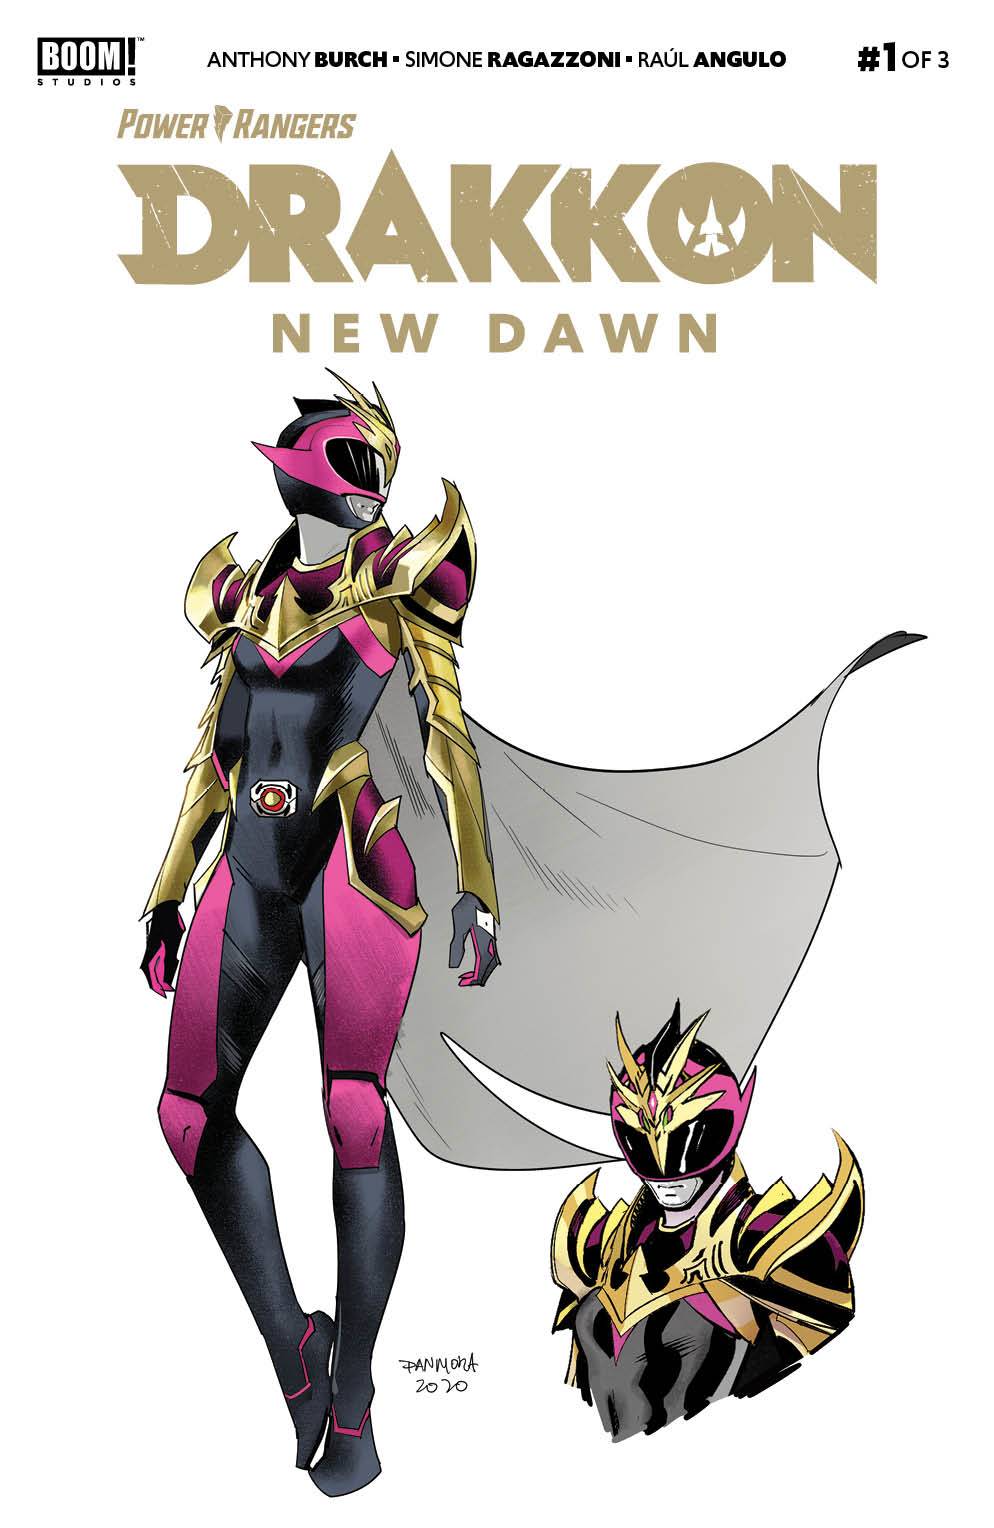 Power Rangers: Drakkon - New Dawn (2020) #1 (of 3) 2nd Print